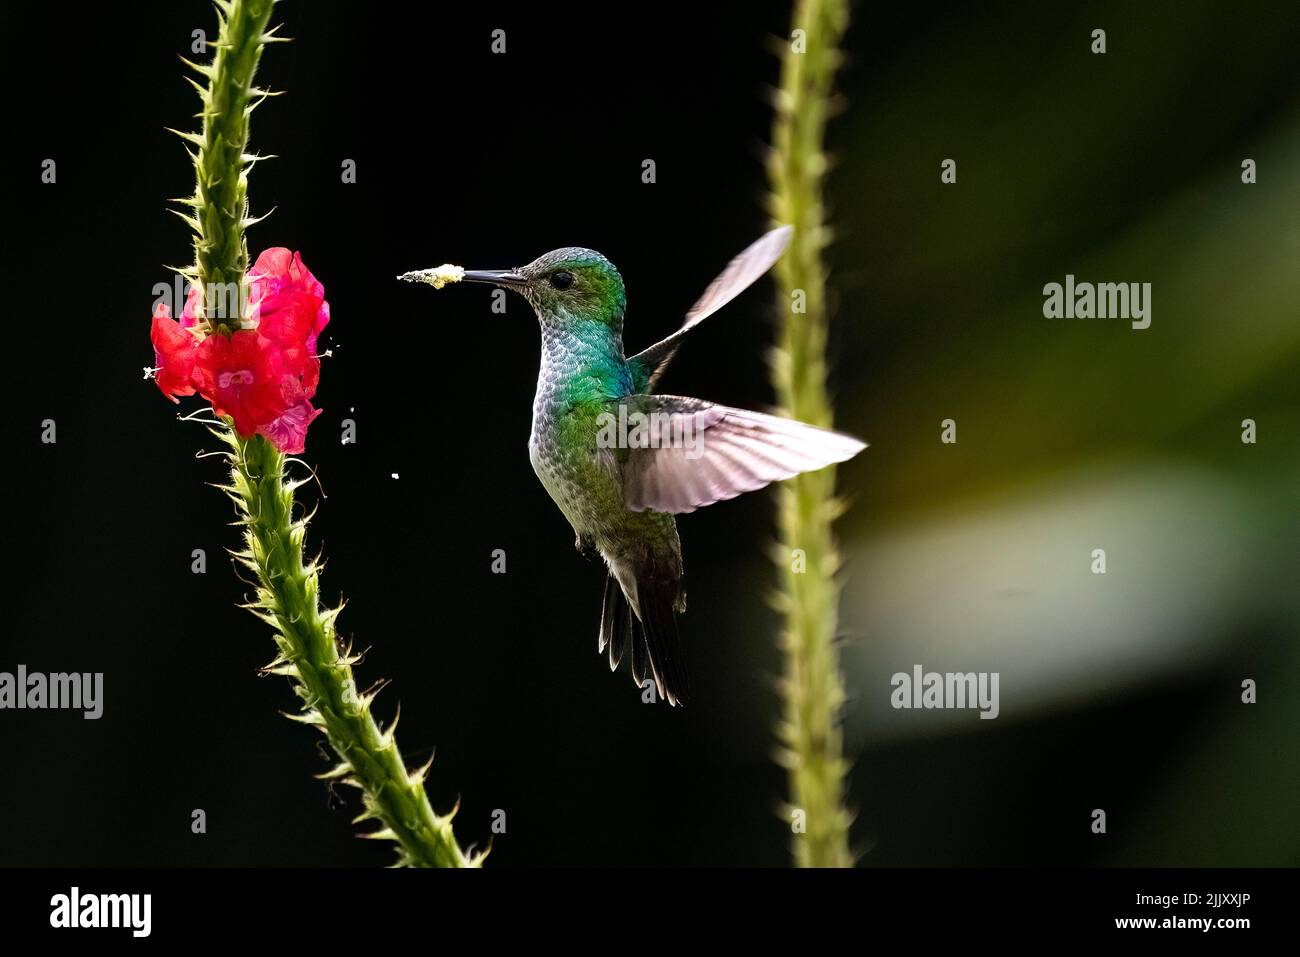 Green hummingbird in flight feeding on a red flower Stock Photo